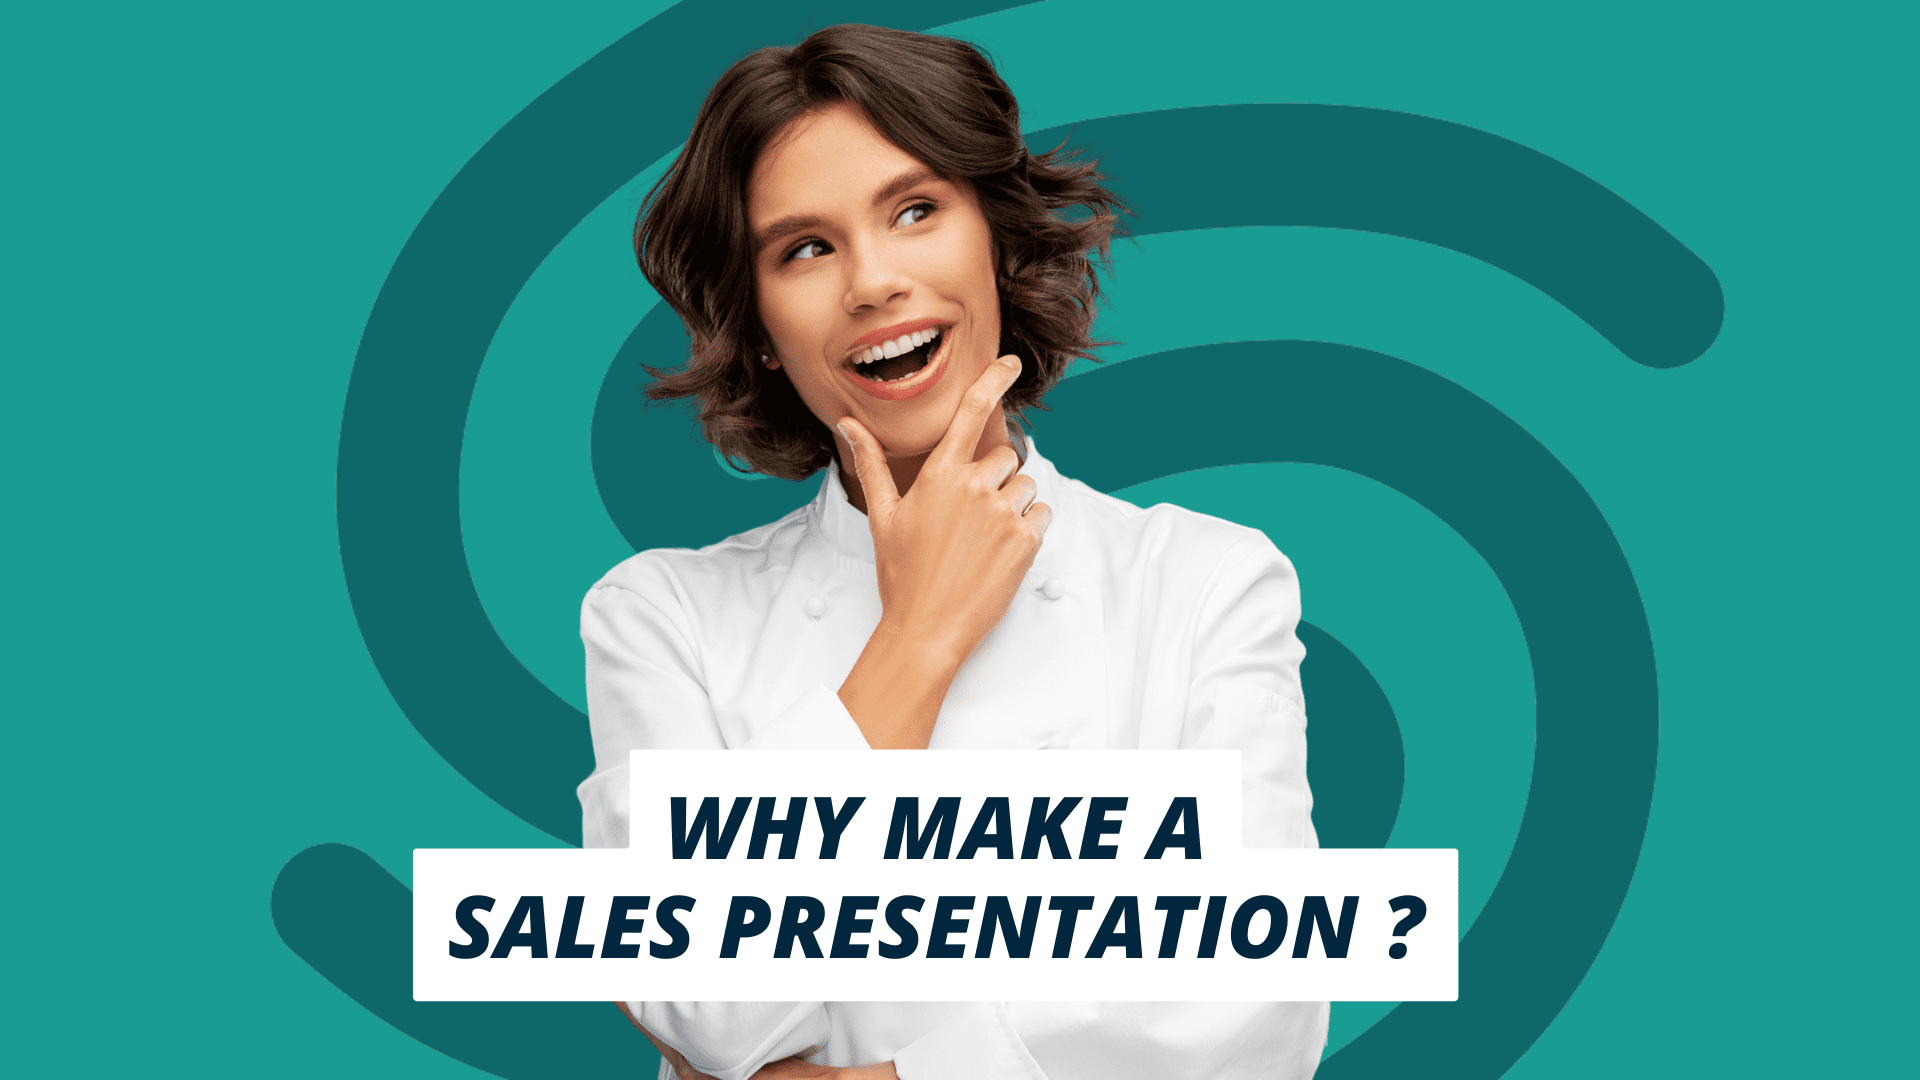 Why make a sales presentation?